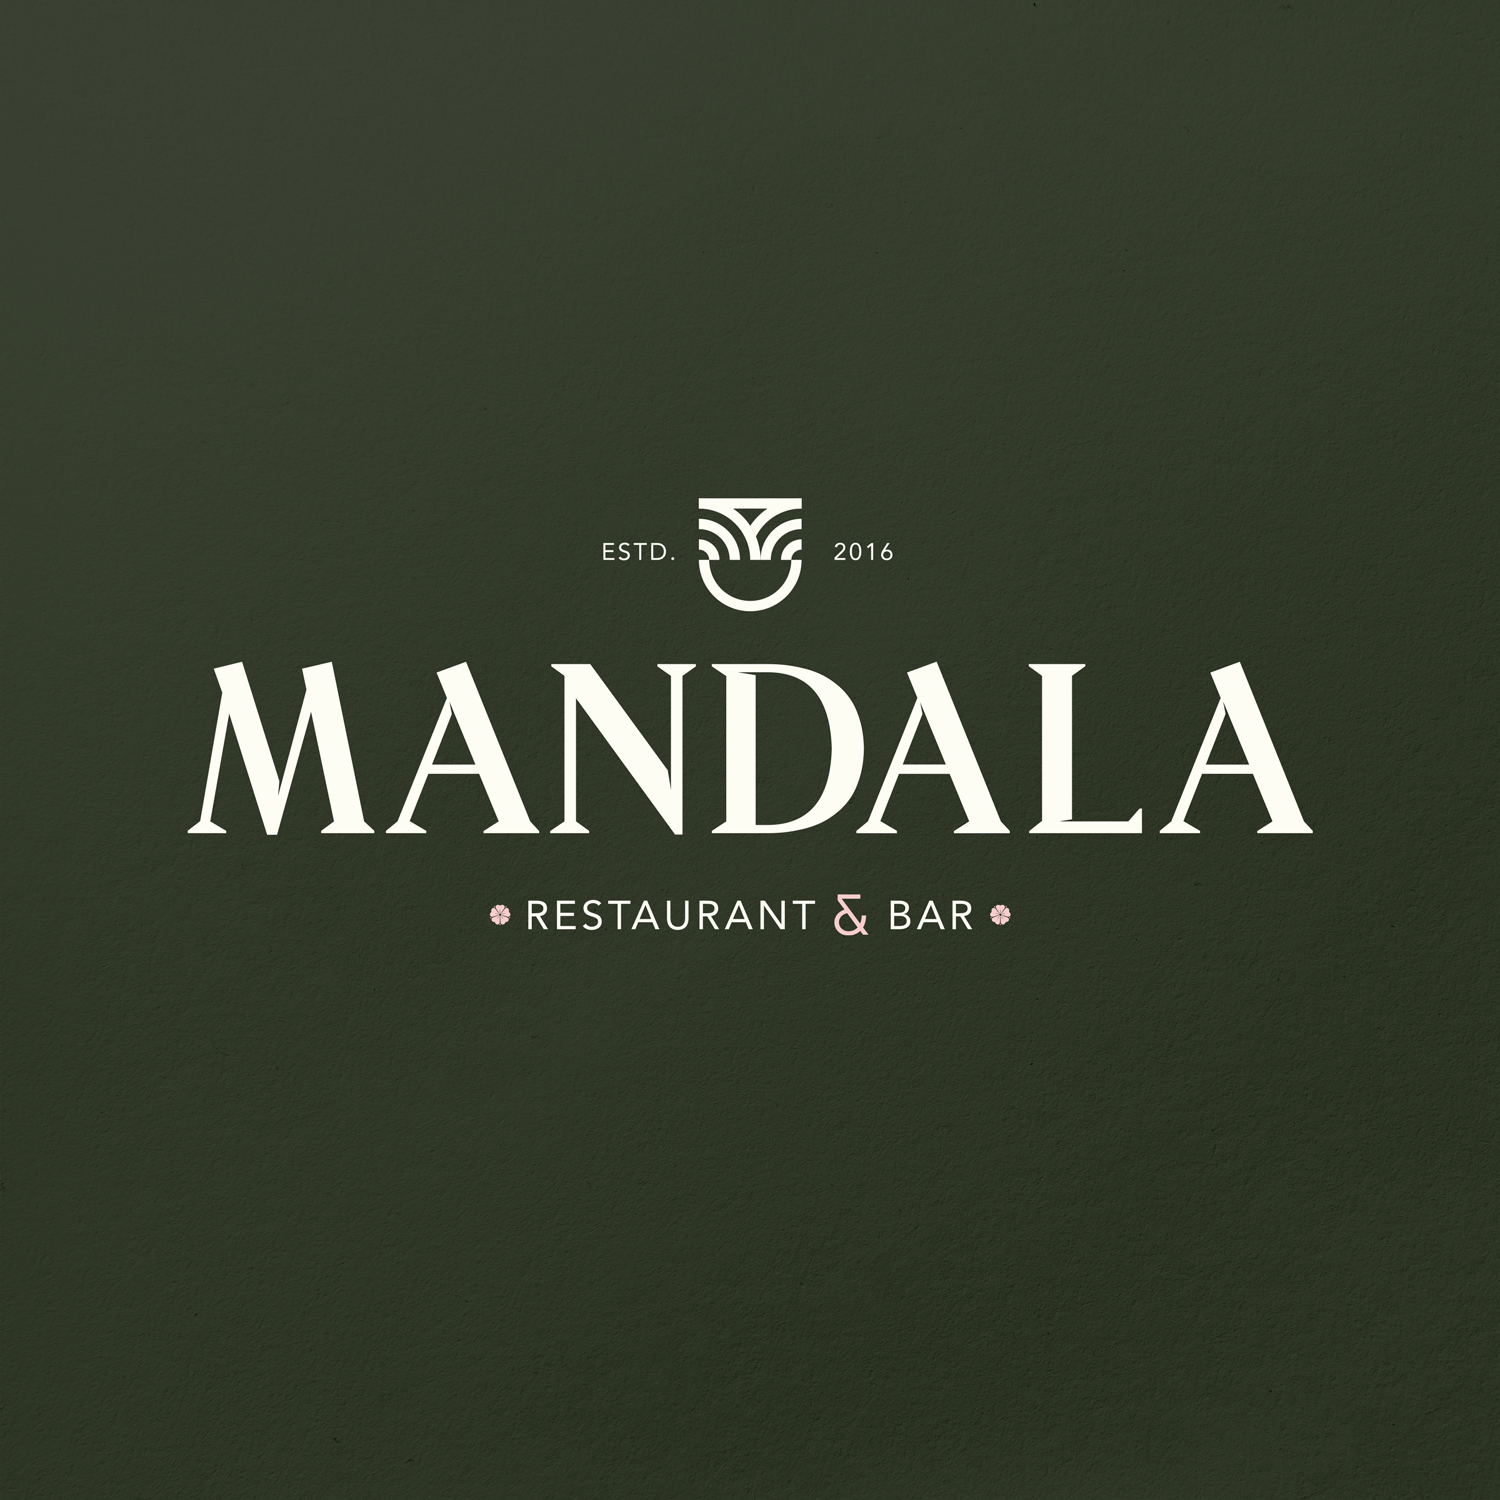 Mandala Bar and Restaurant Branding Created by Buckwild